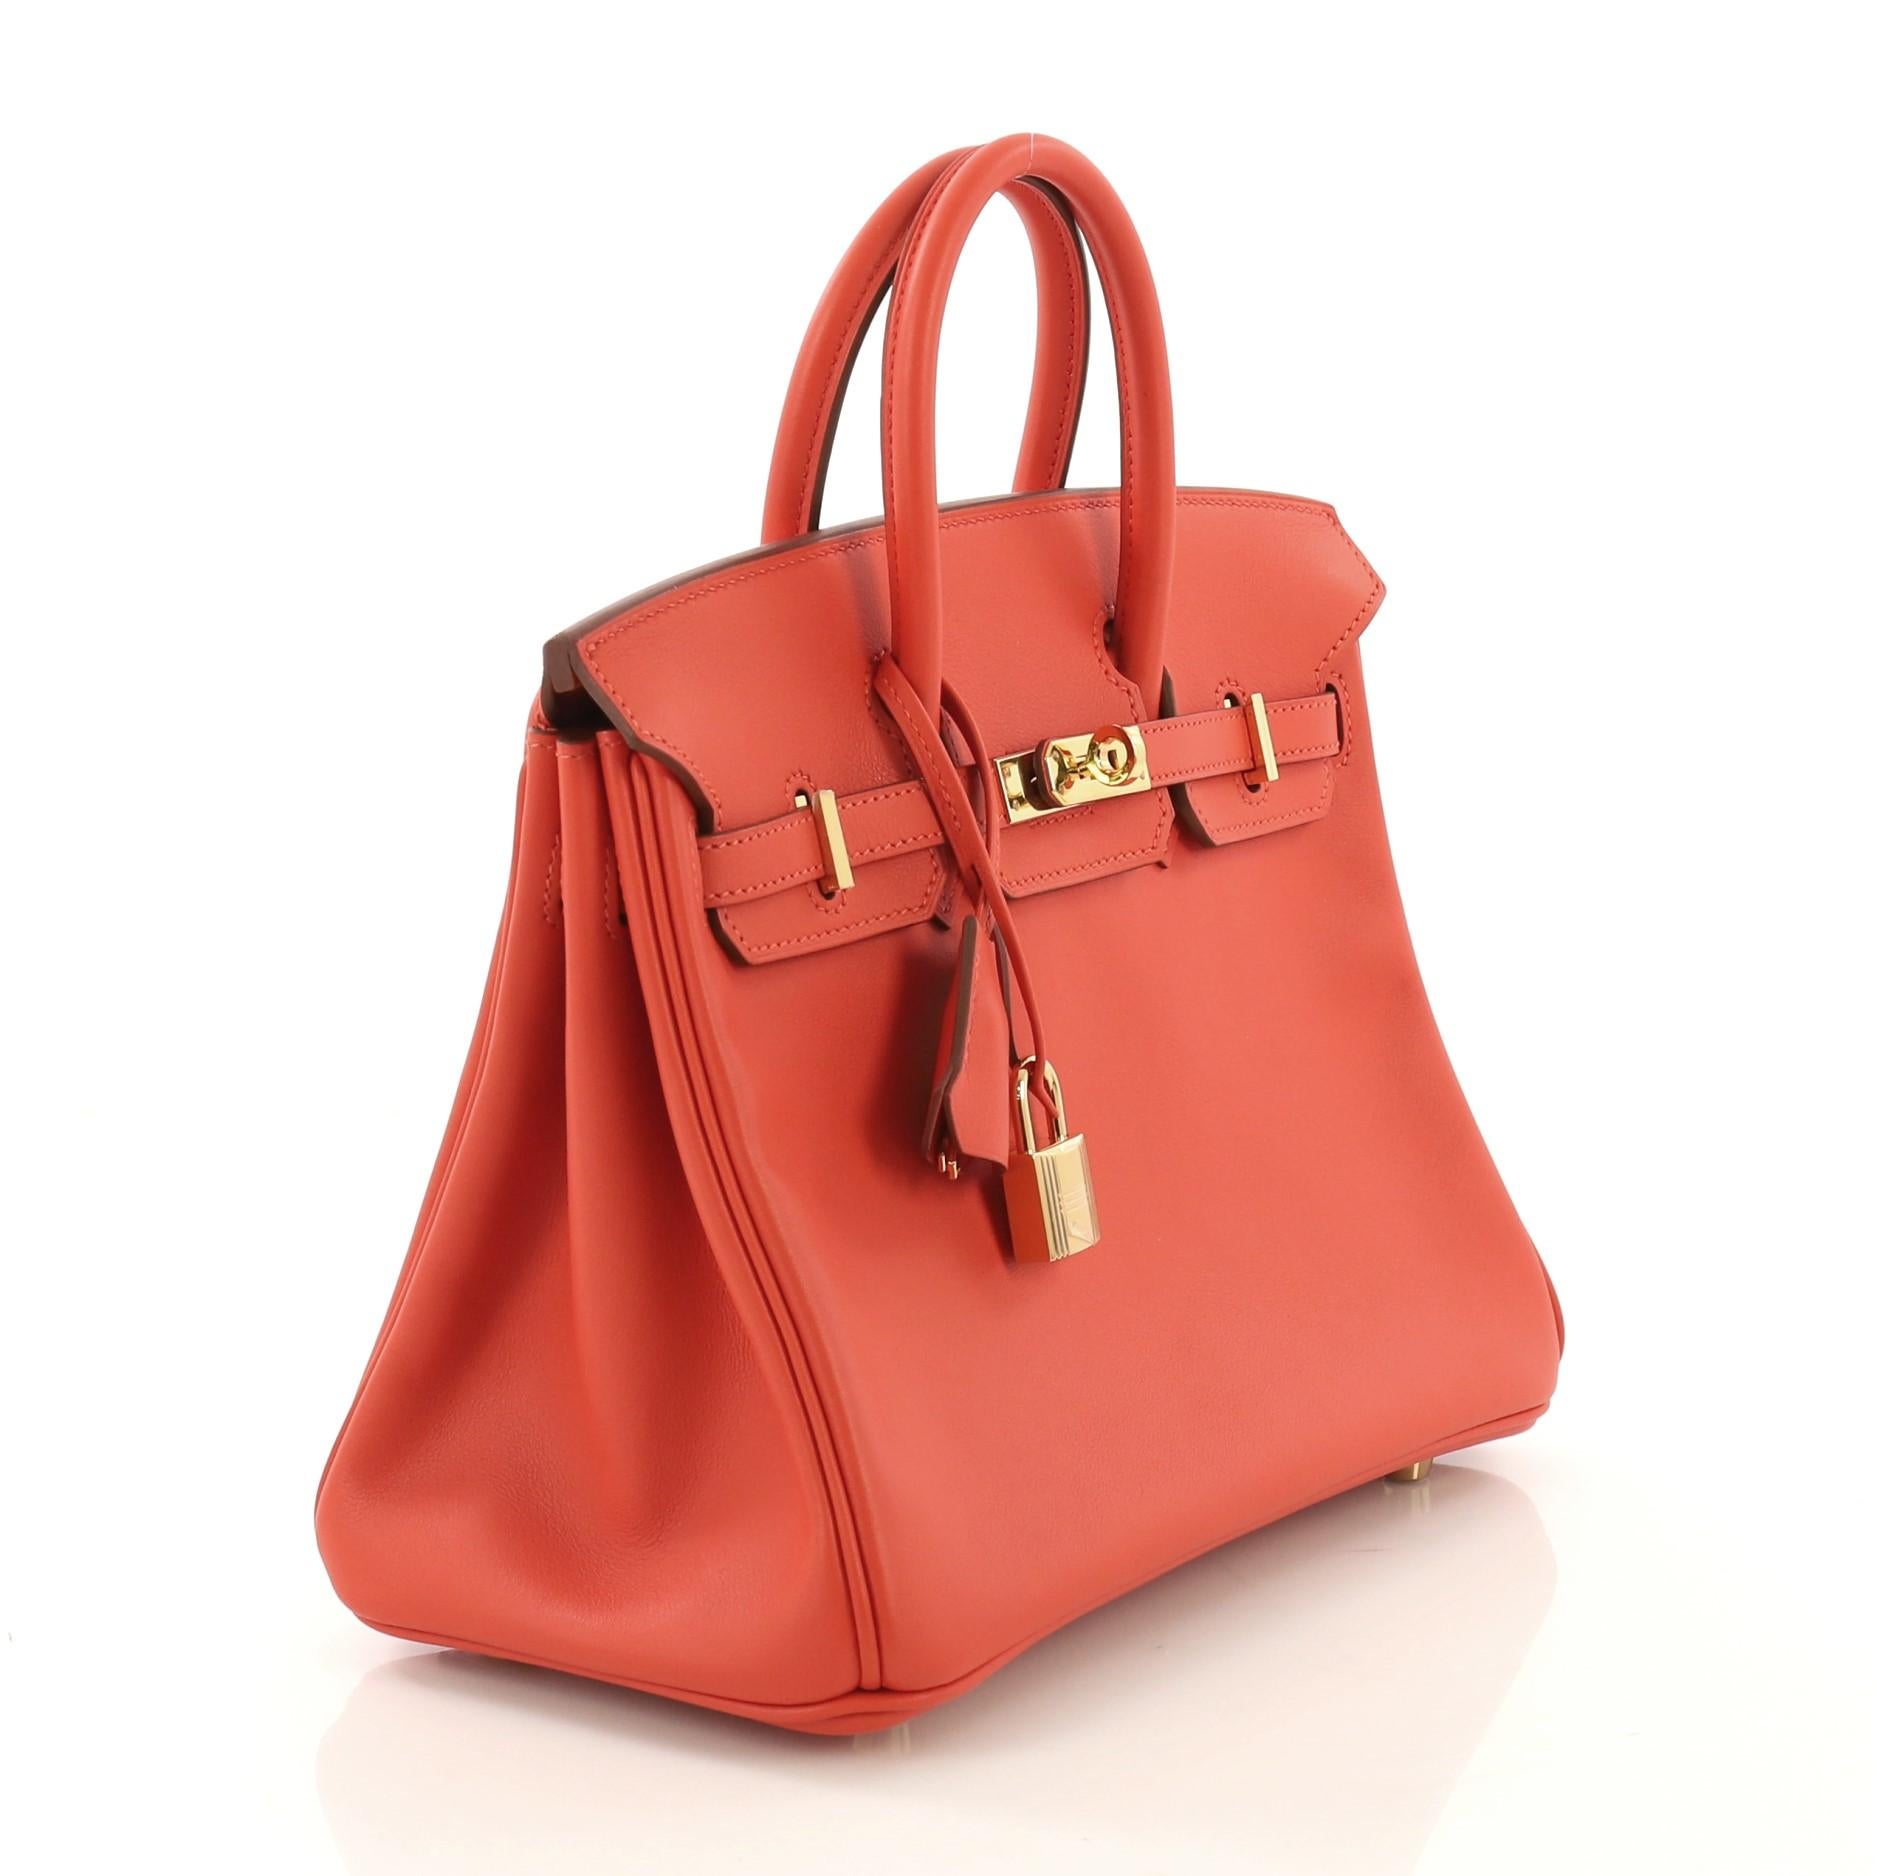 Red Hermes Birkin Handbag Capucine Swift with Gold Hardware 25